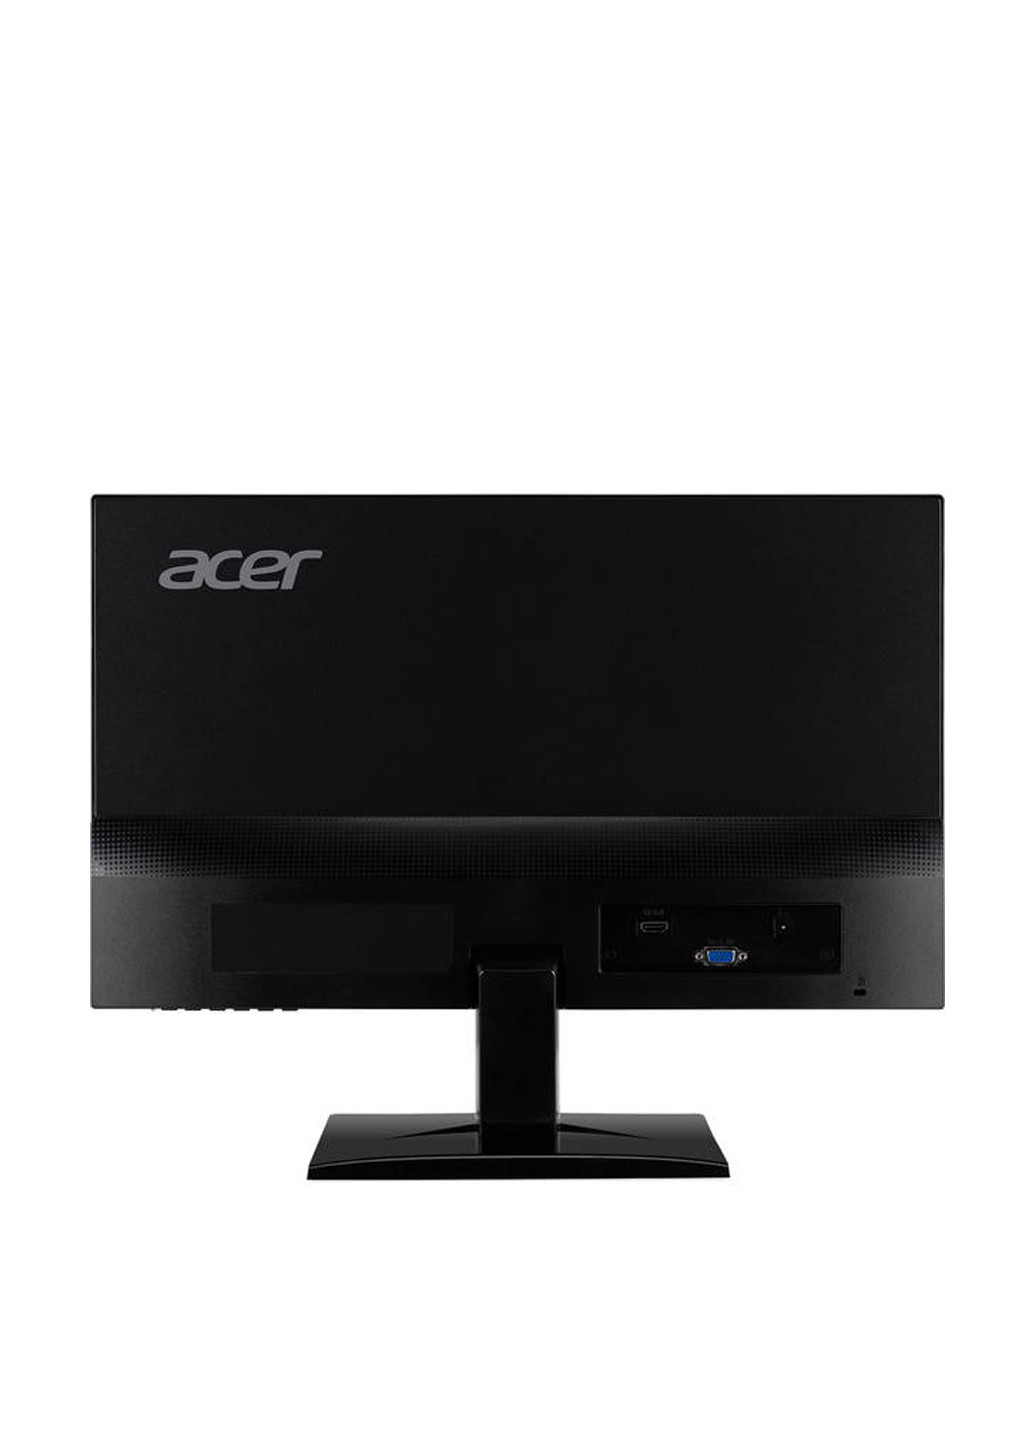 Монитор 21.5" HA220Qbid (UM.WW0EE.005) Acer монитор 21.5" acer ha220qbid (um.ww0ee.005) (130221562)